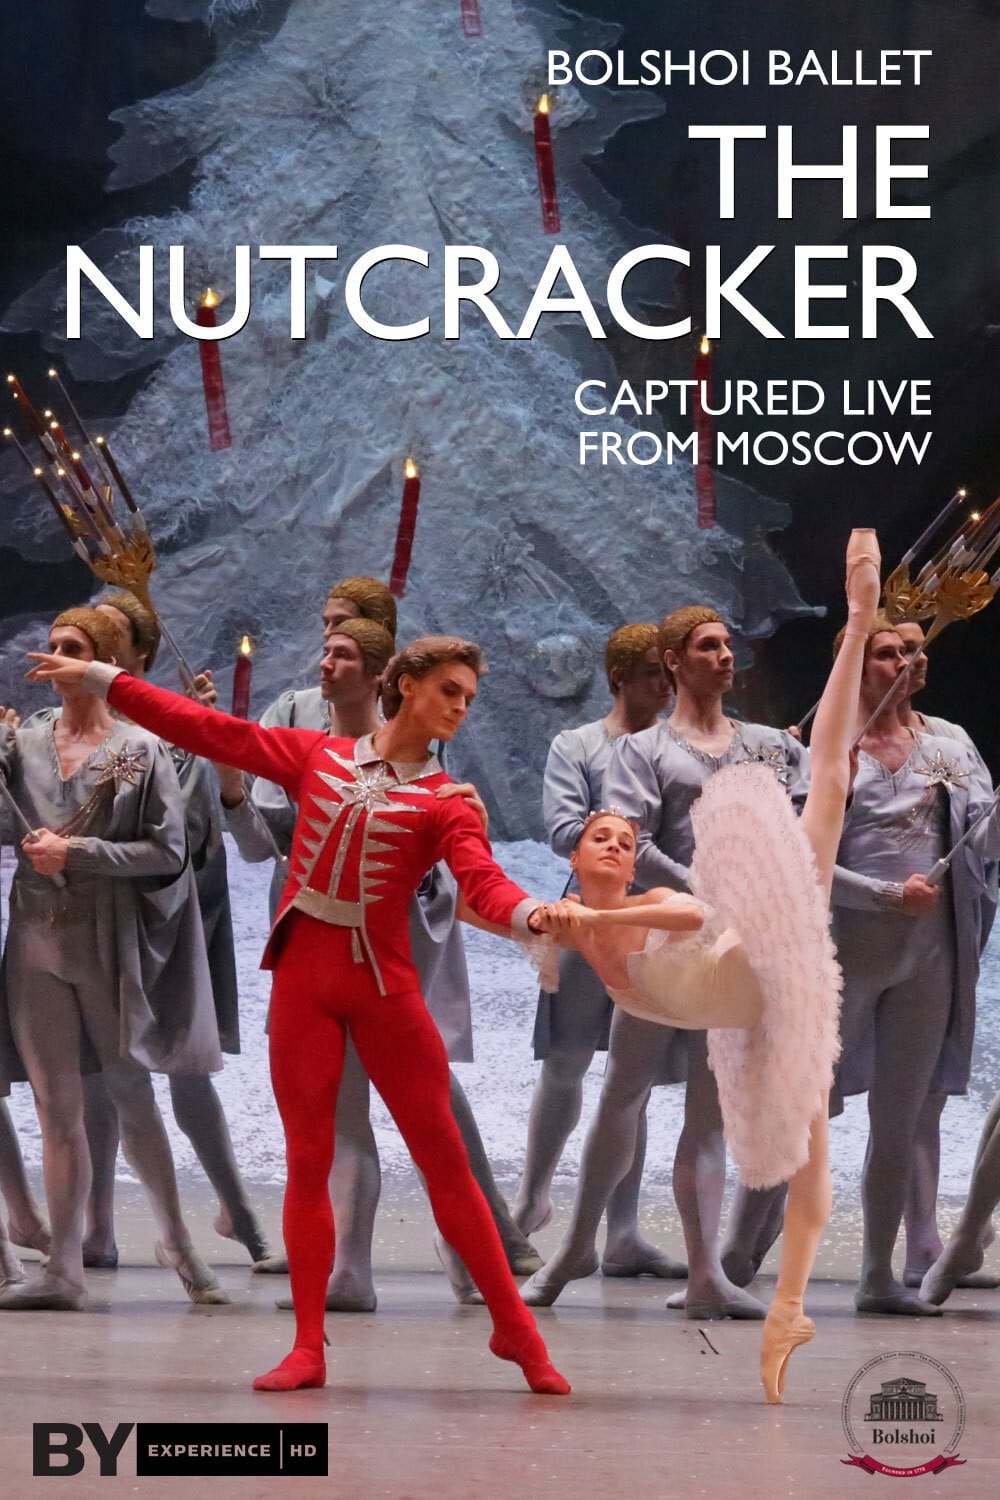 The Bolshoi Ballet:  The Nutcracker